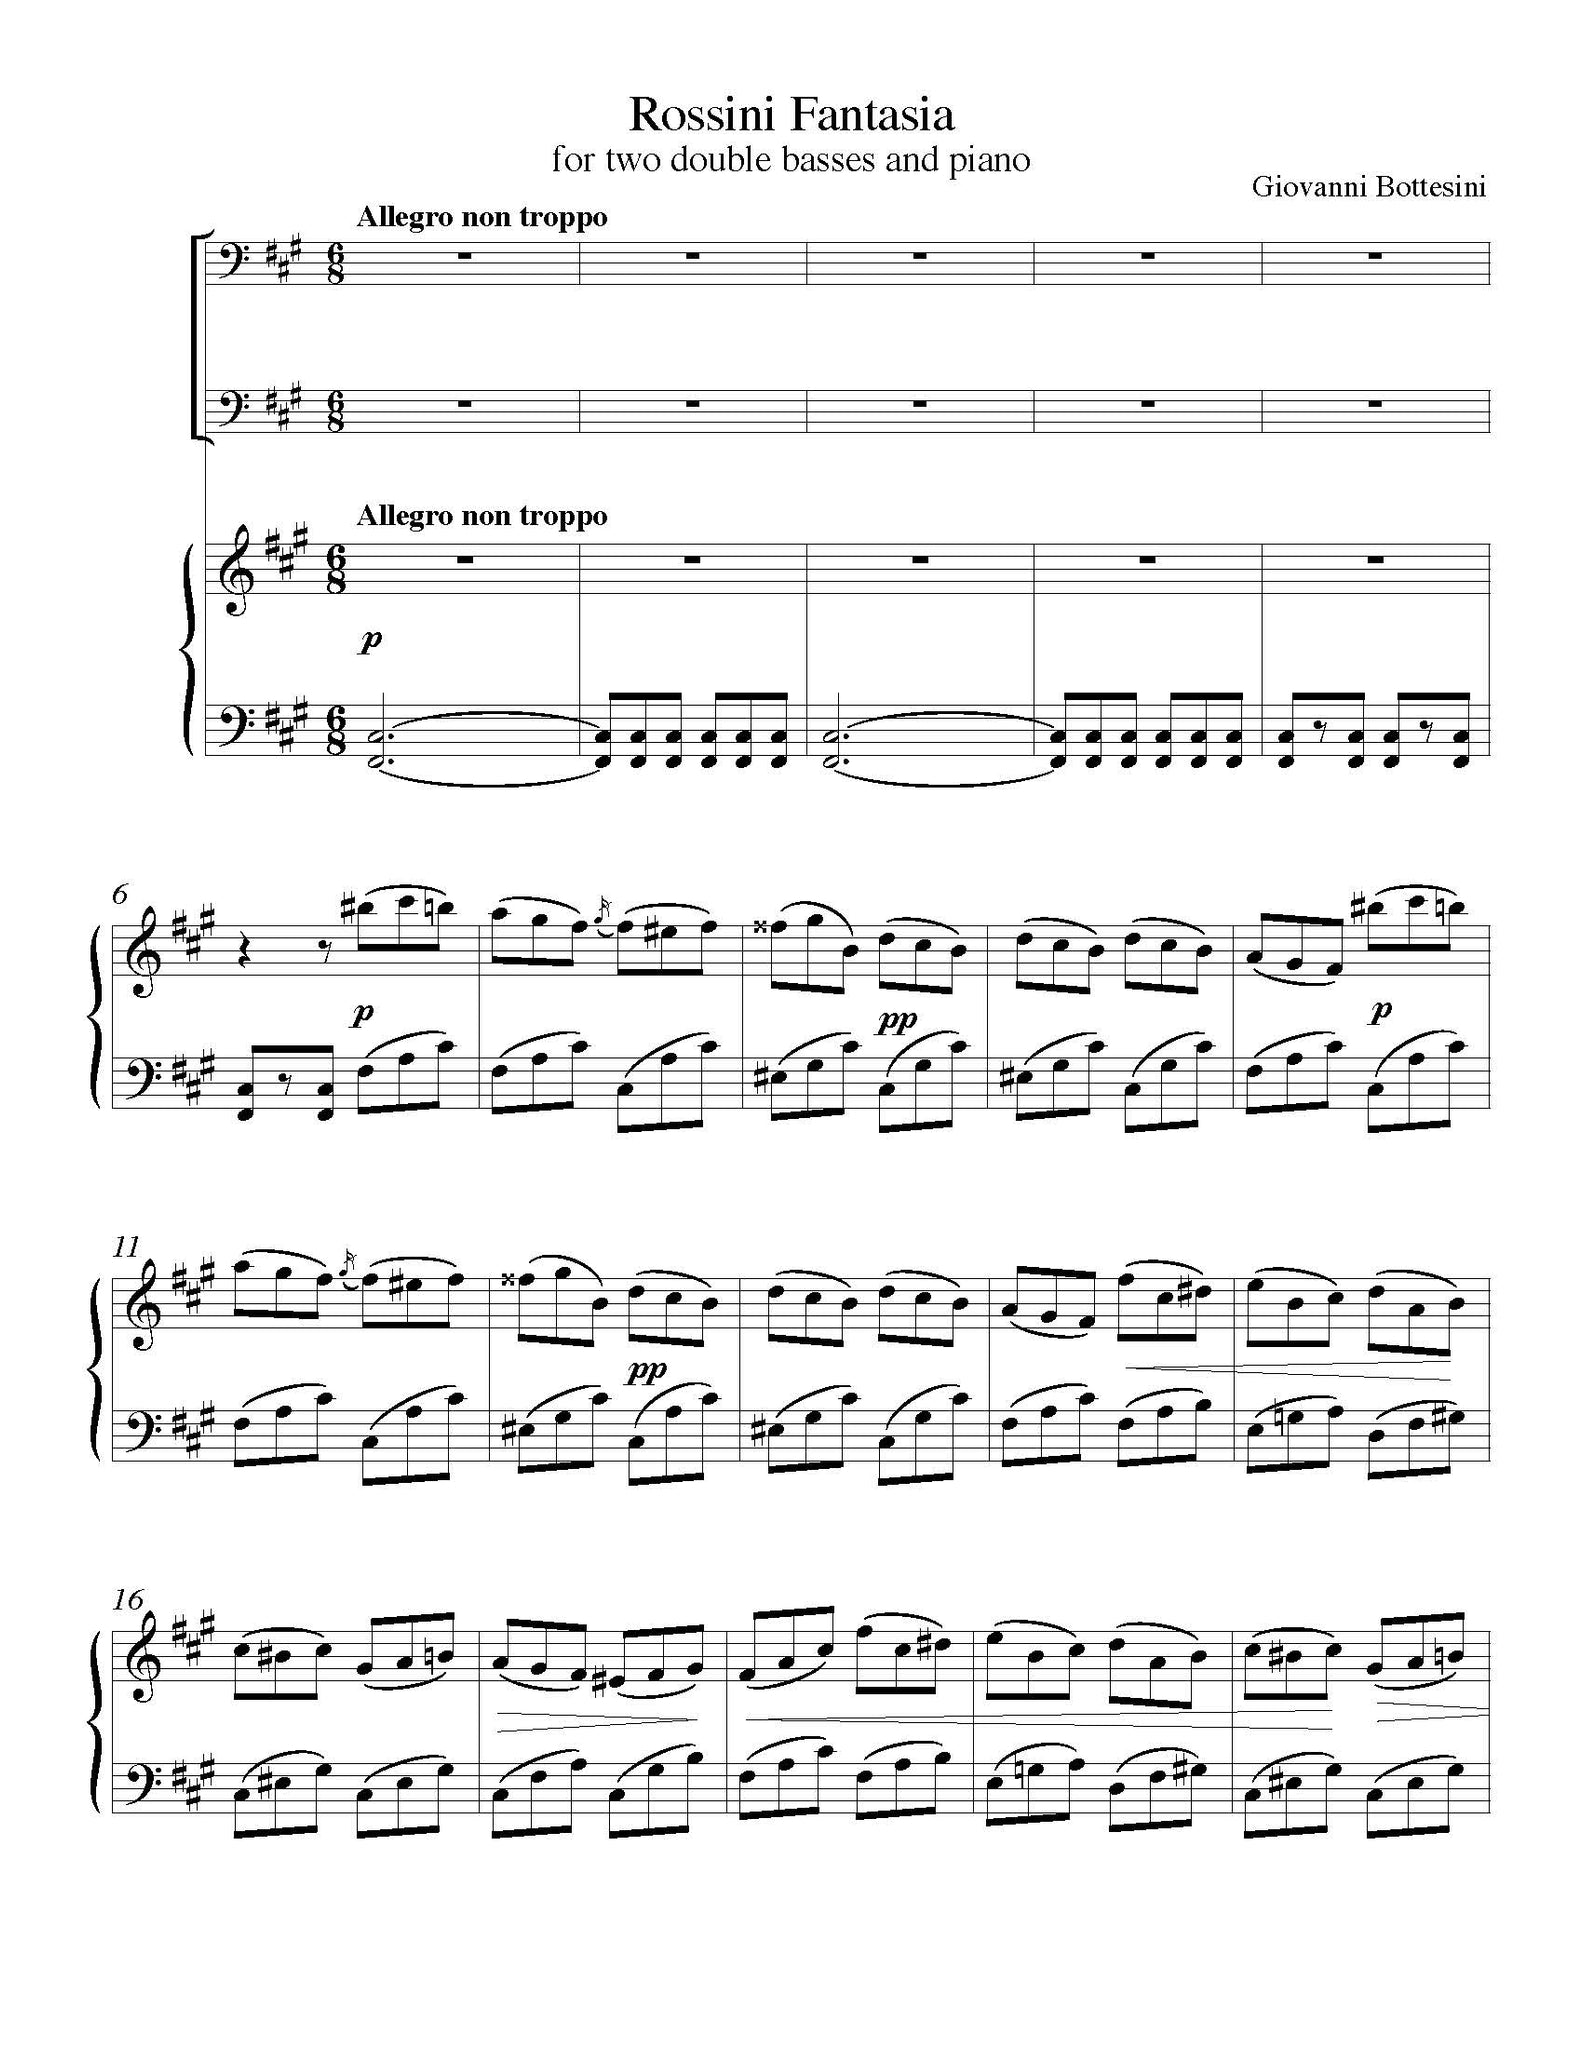 Bottesini Rossini Fantasy solo tuning page 1